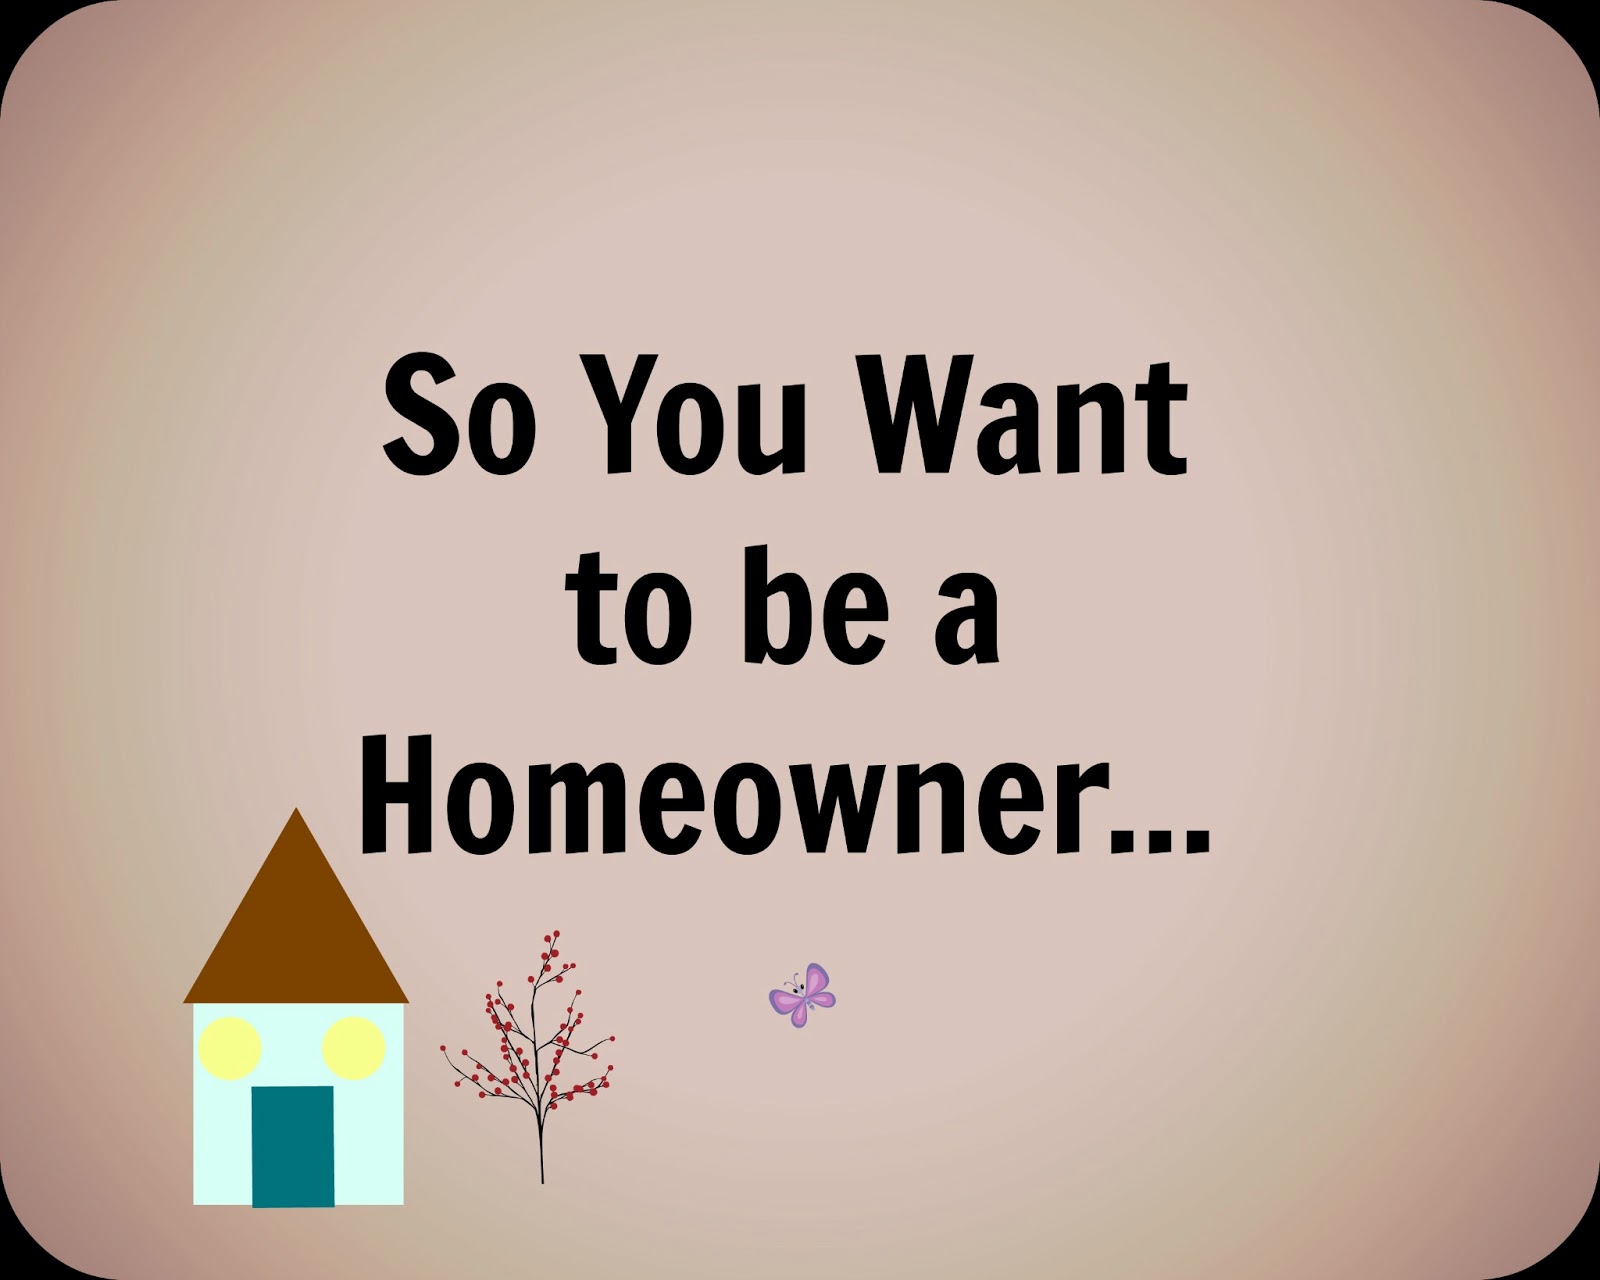 i want to buy a home where do i start